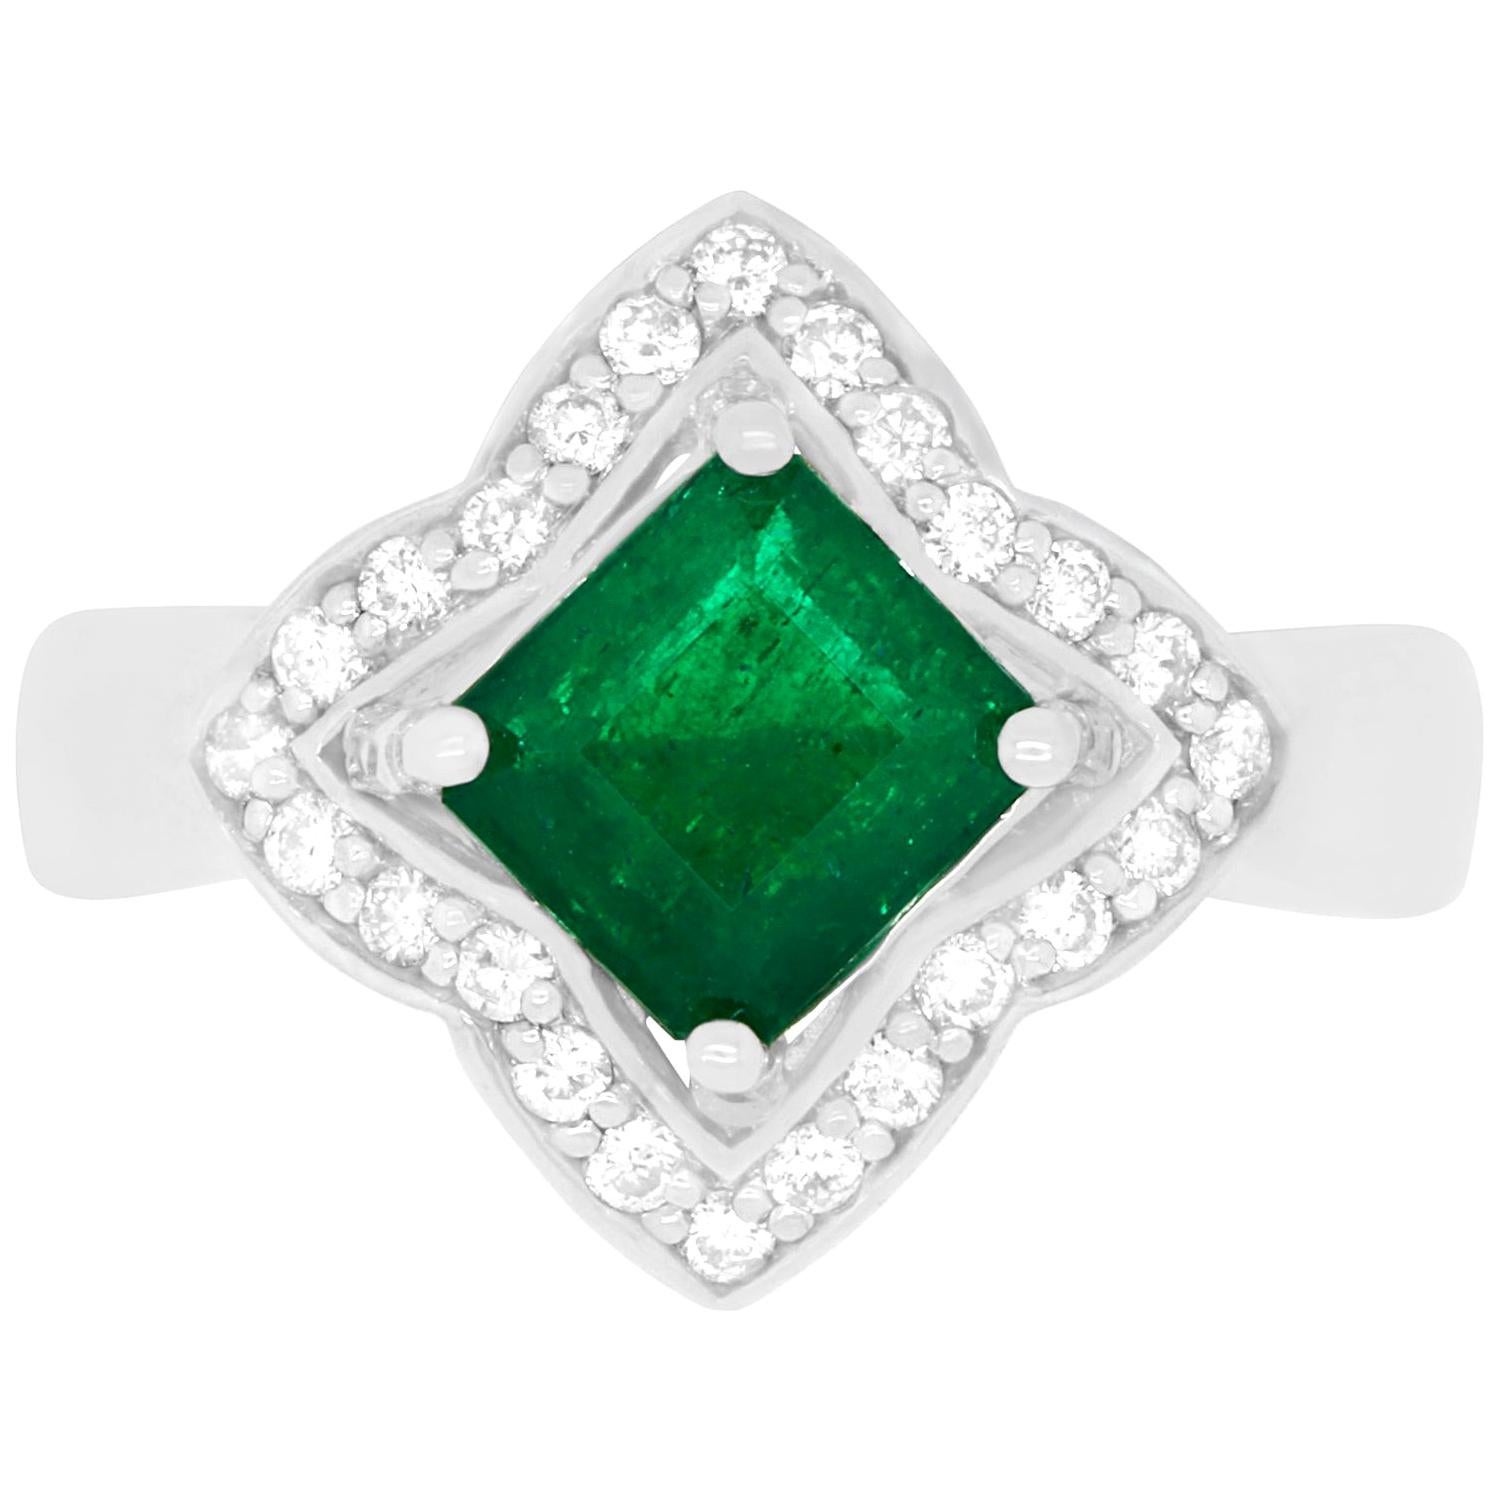 1.40 Carat Cushion Cut Emerald and 0.29 Carat White Diamond Ring